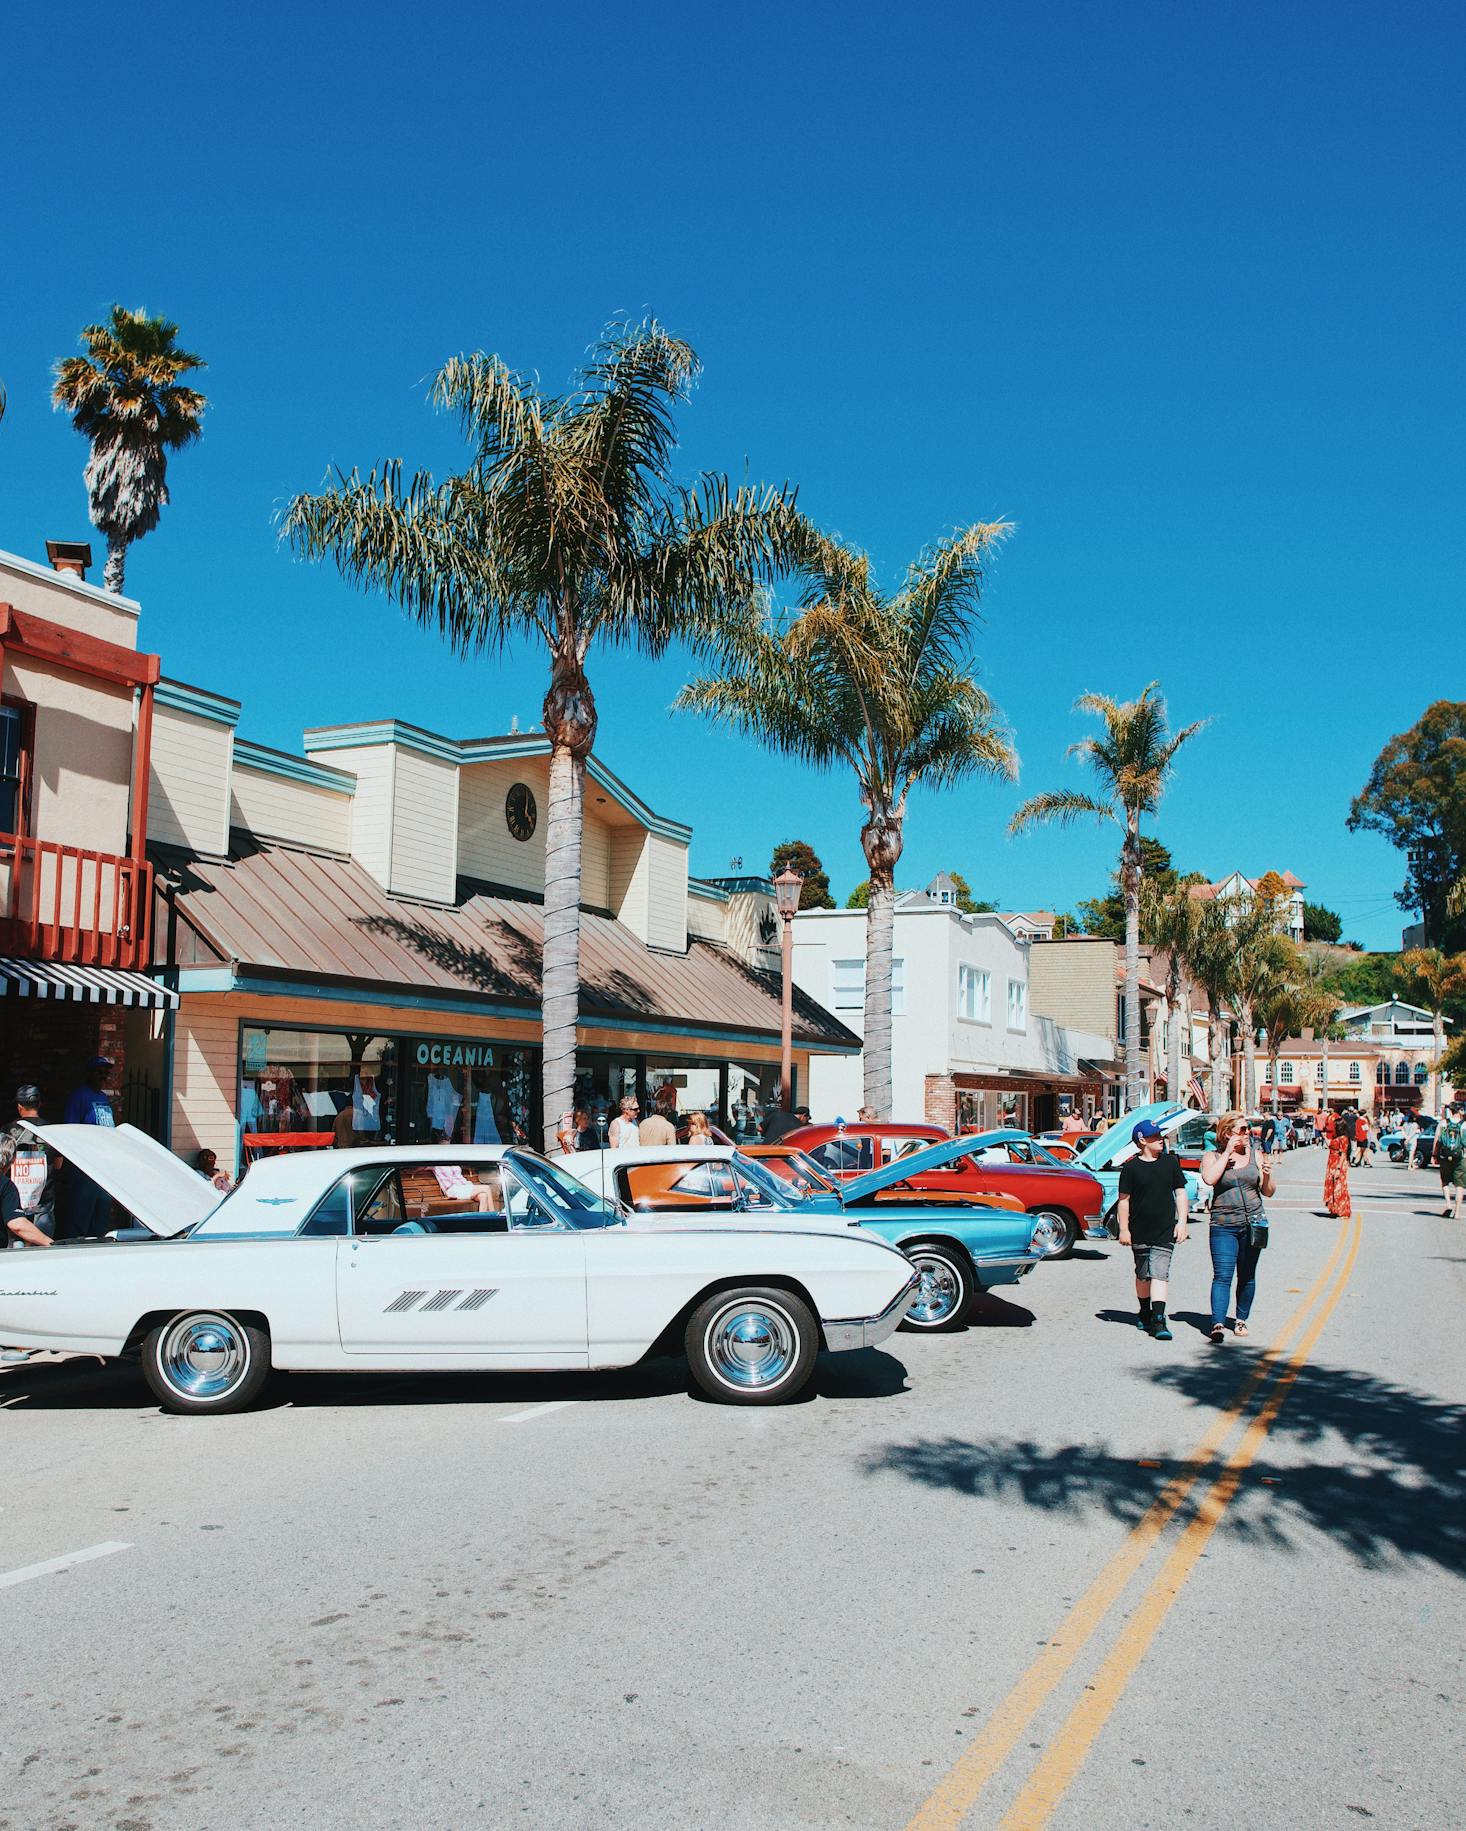 Shopping street in Santa Cruz, California